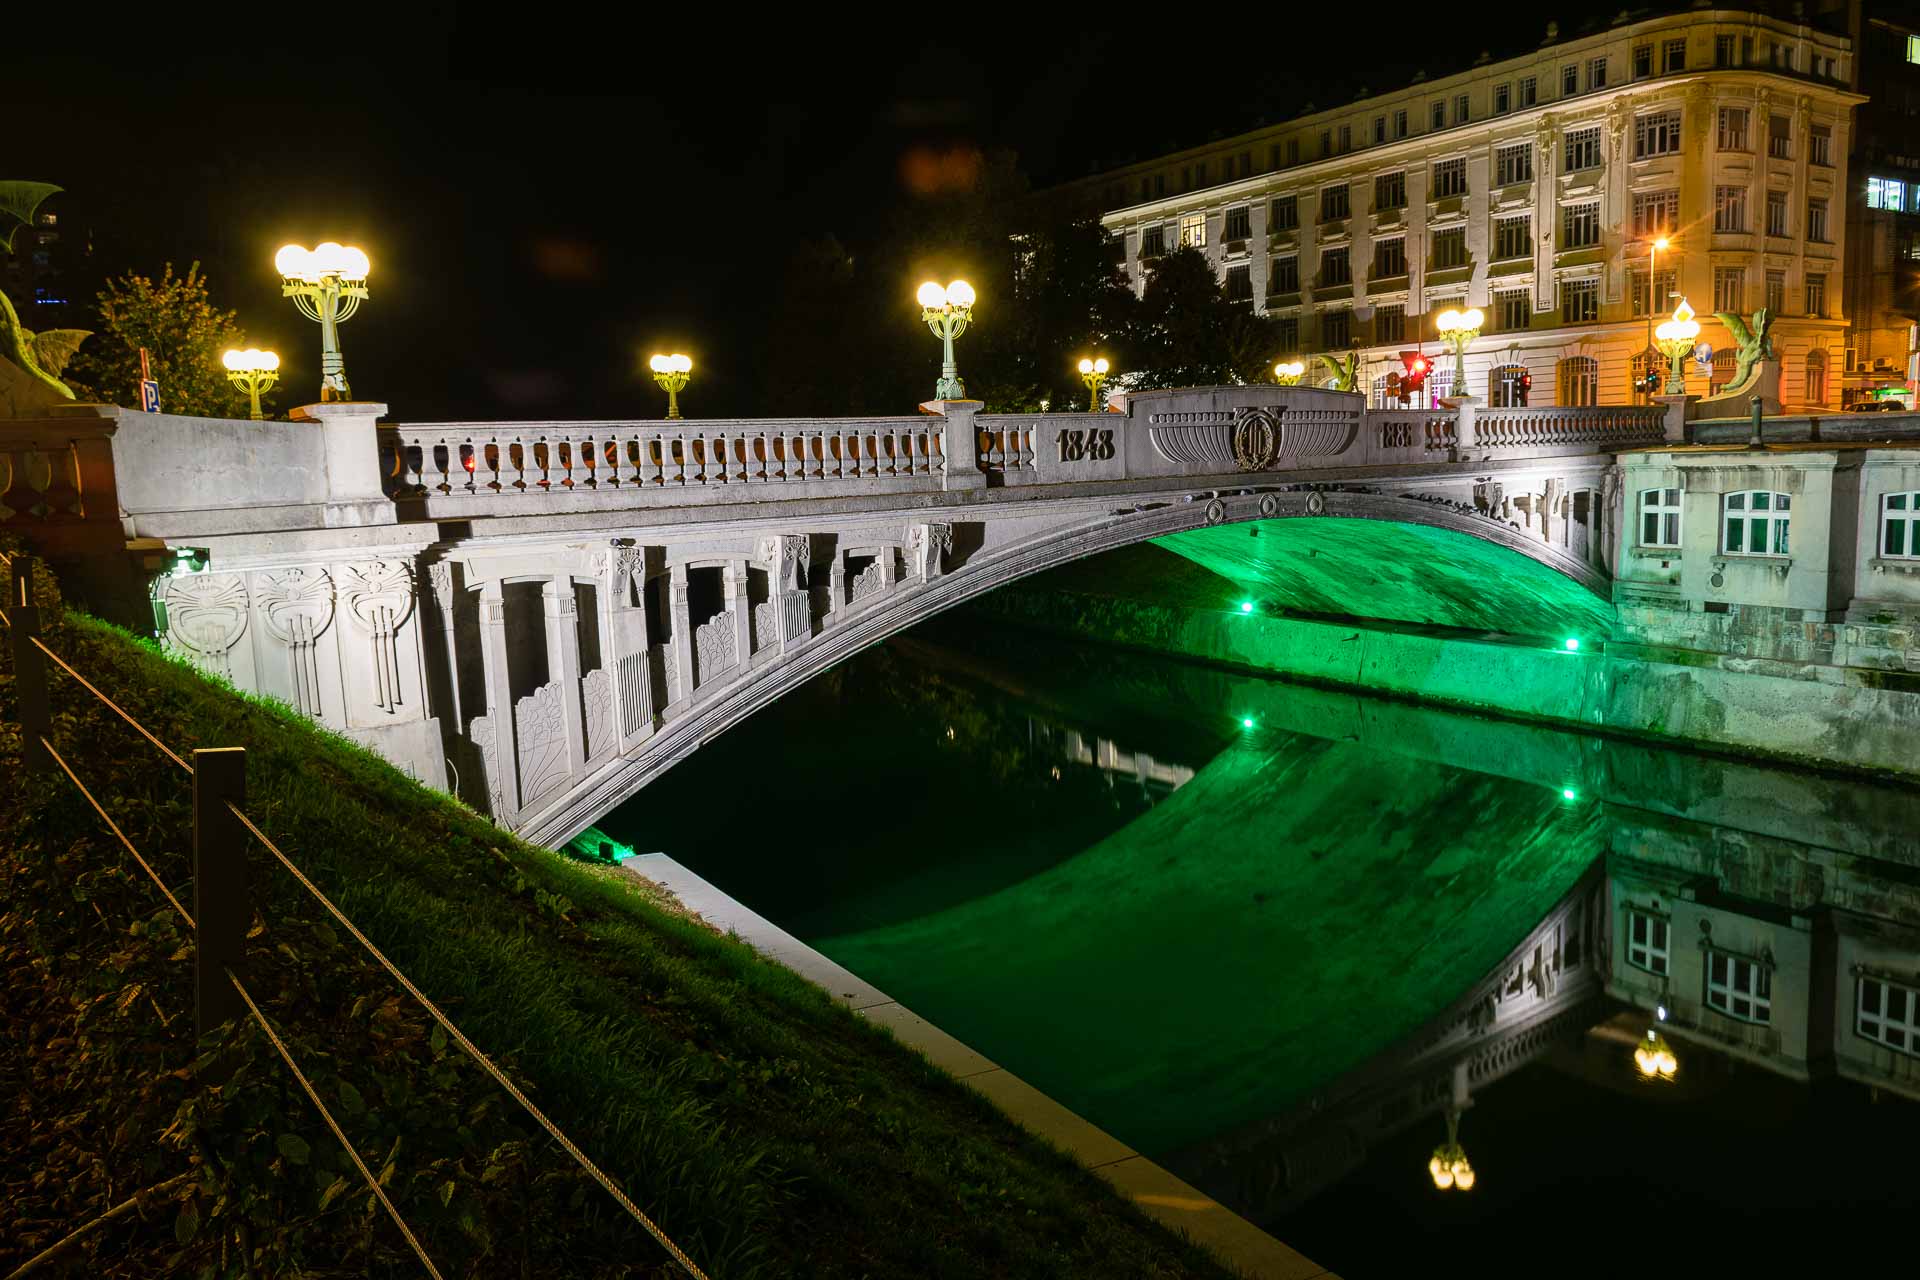 A bridge in Ljubljana at night with green light underneath